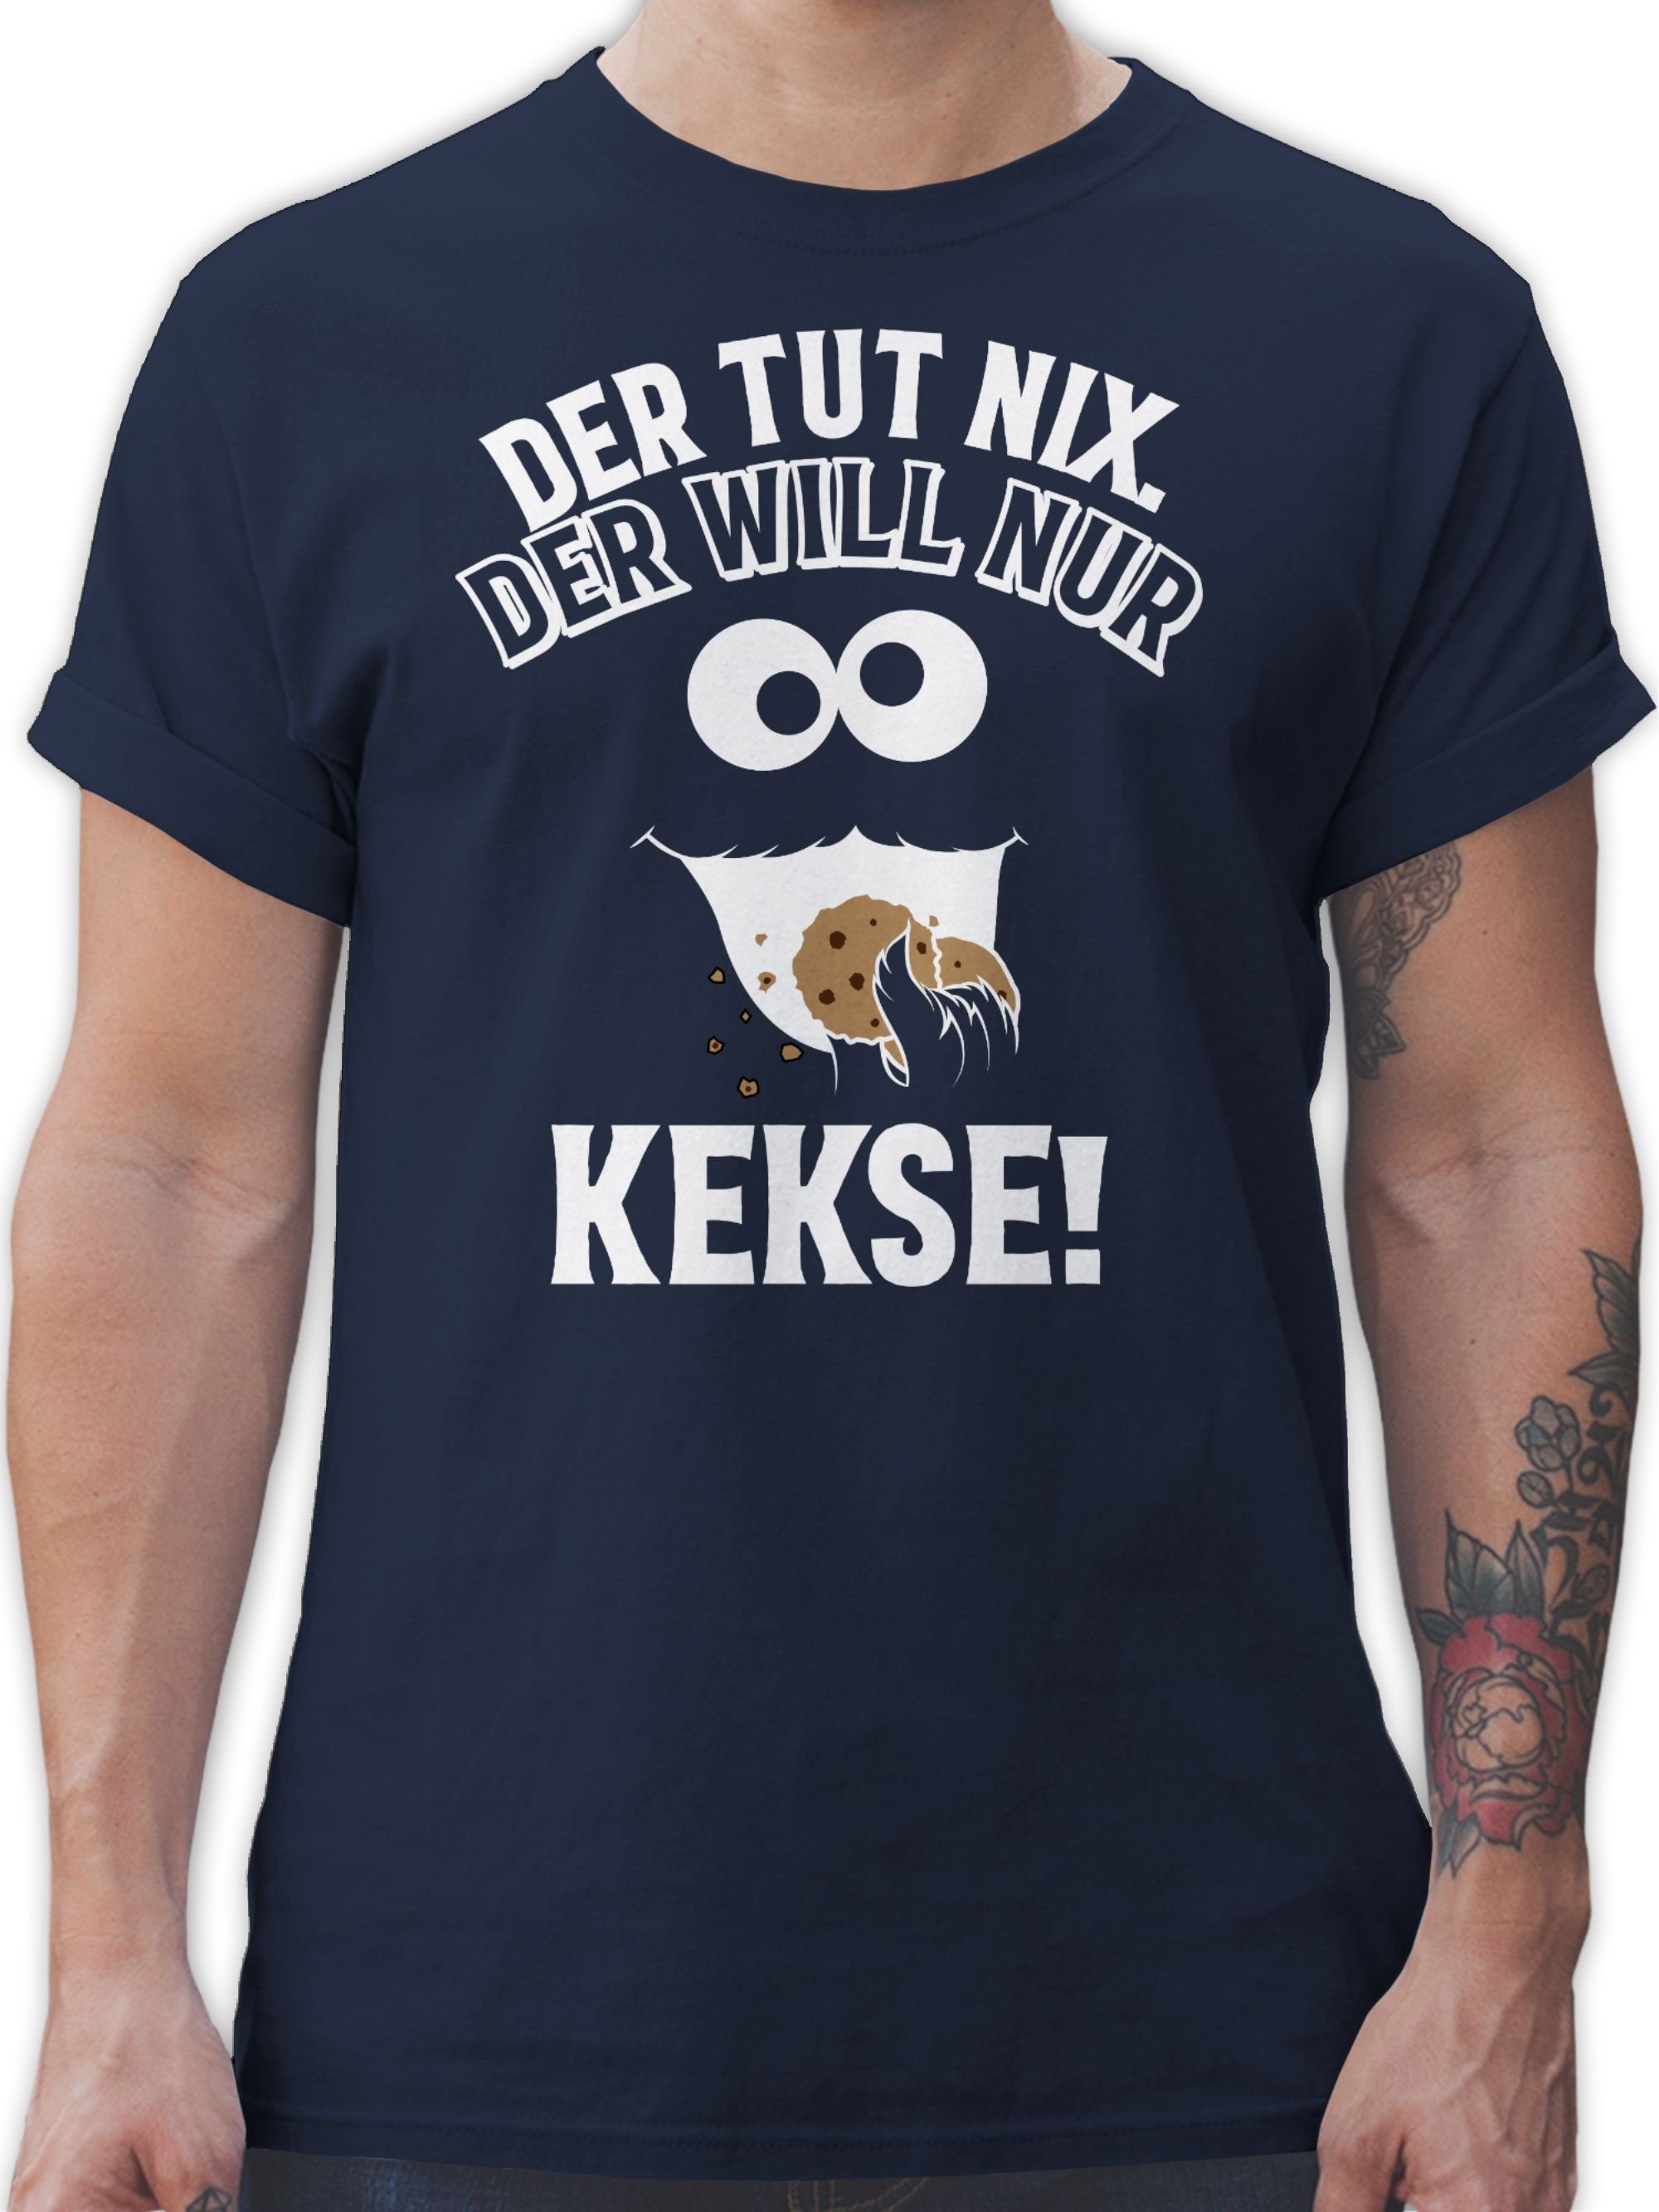 Shirtracer T-Shirt Blau Cookie will Keksmons 03 Outfit Karneval Der tut Navy nur Kekse! Der nix. Krümelmonster Monster